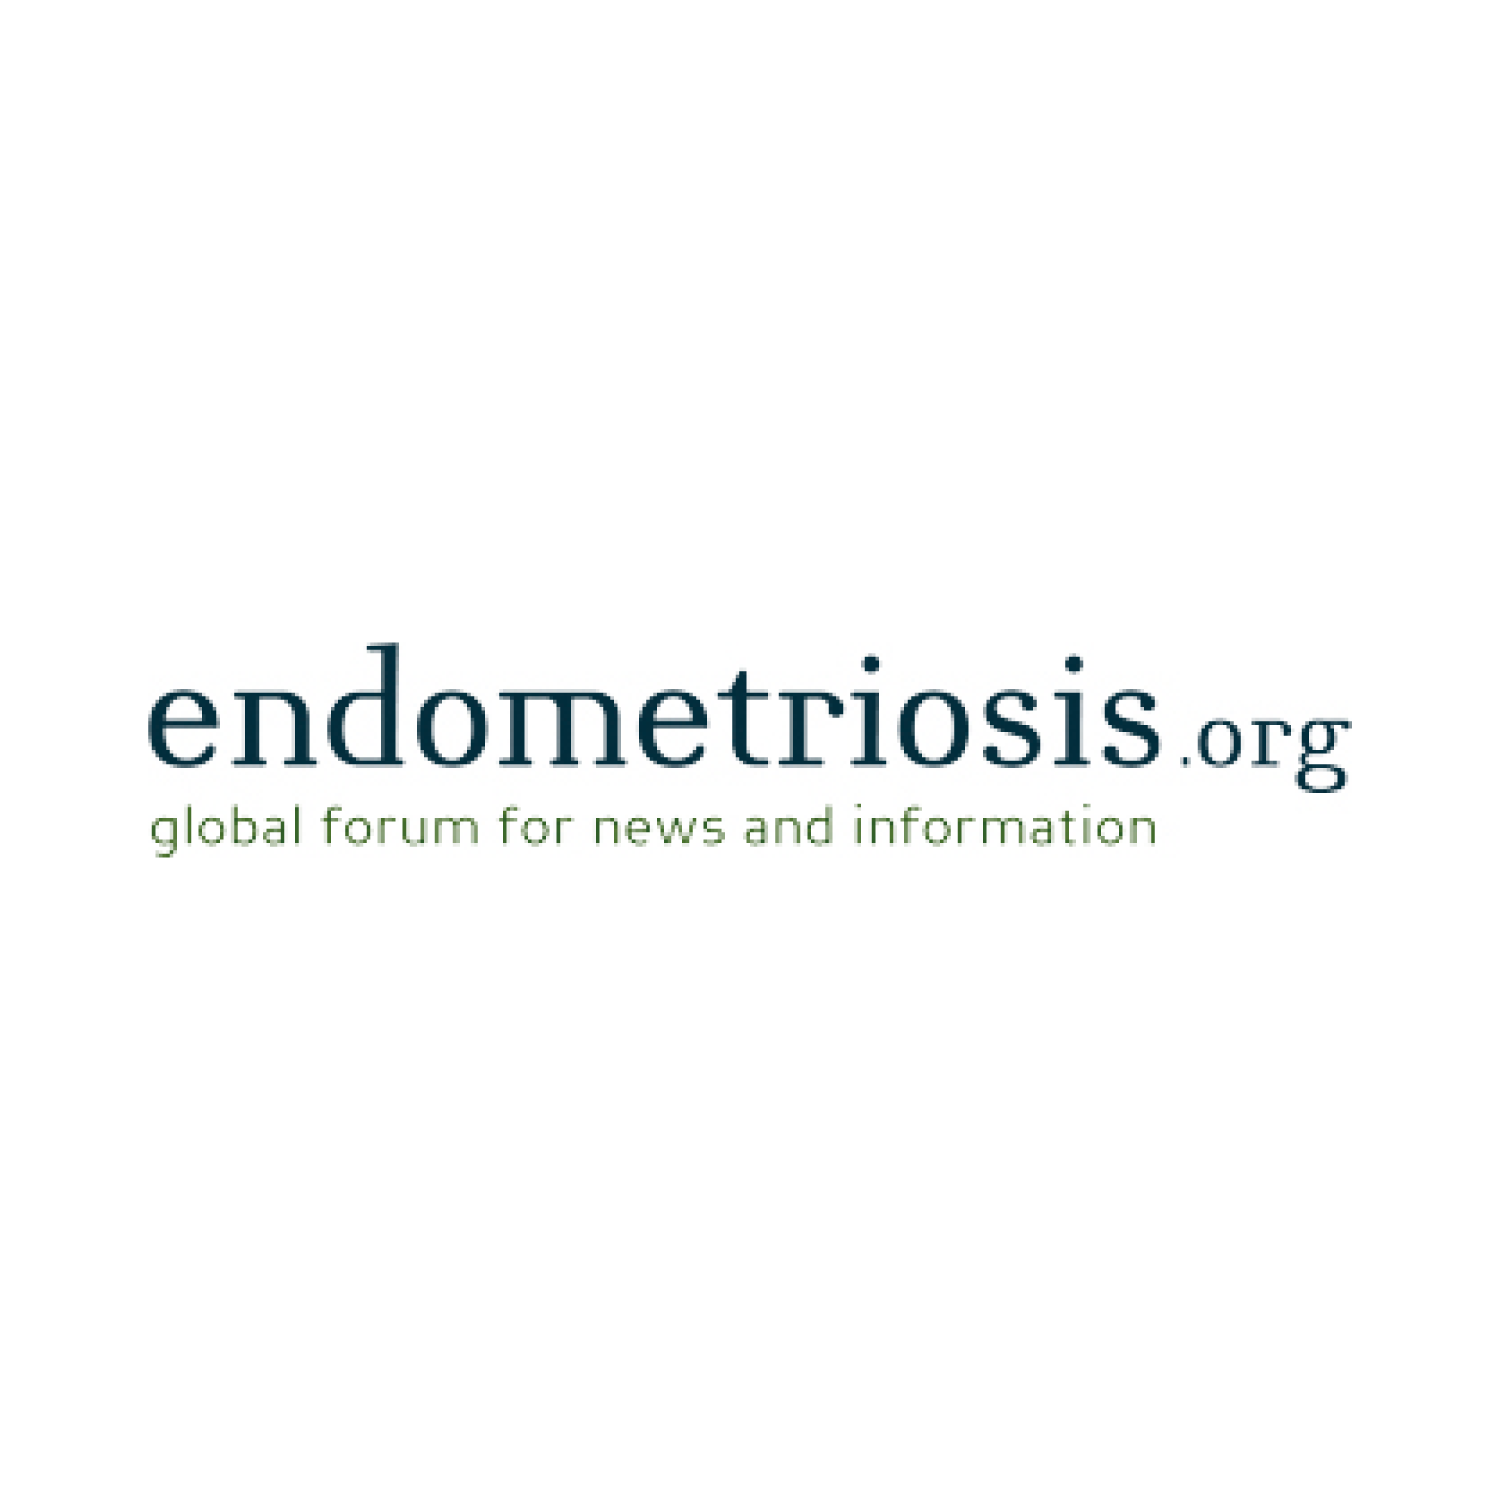 Endometriosis.org